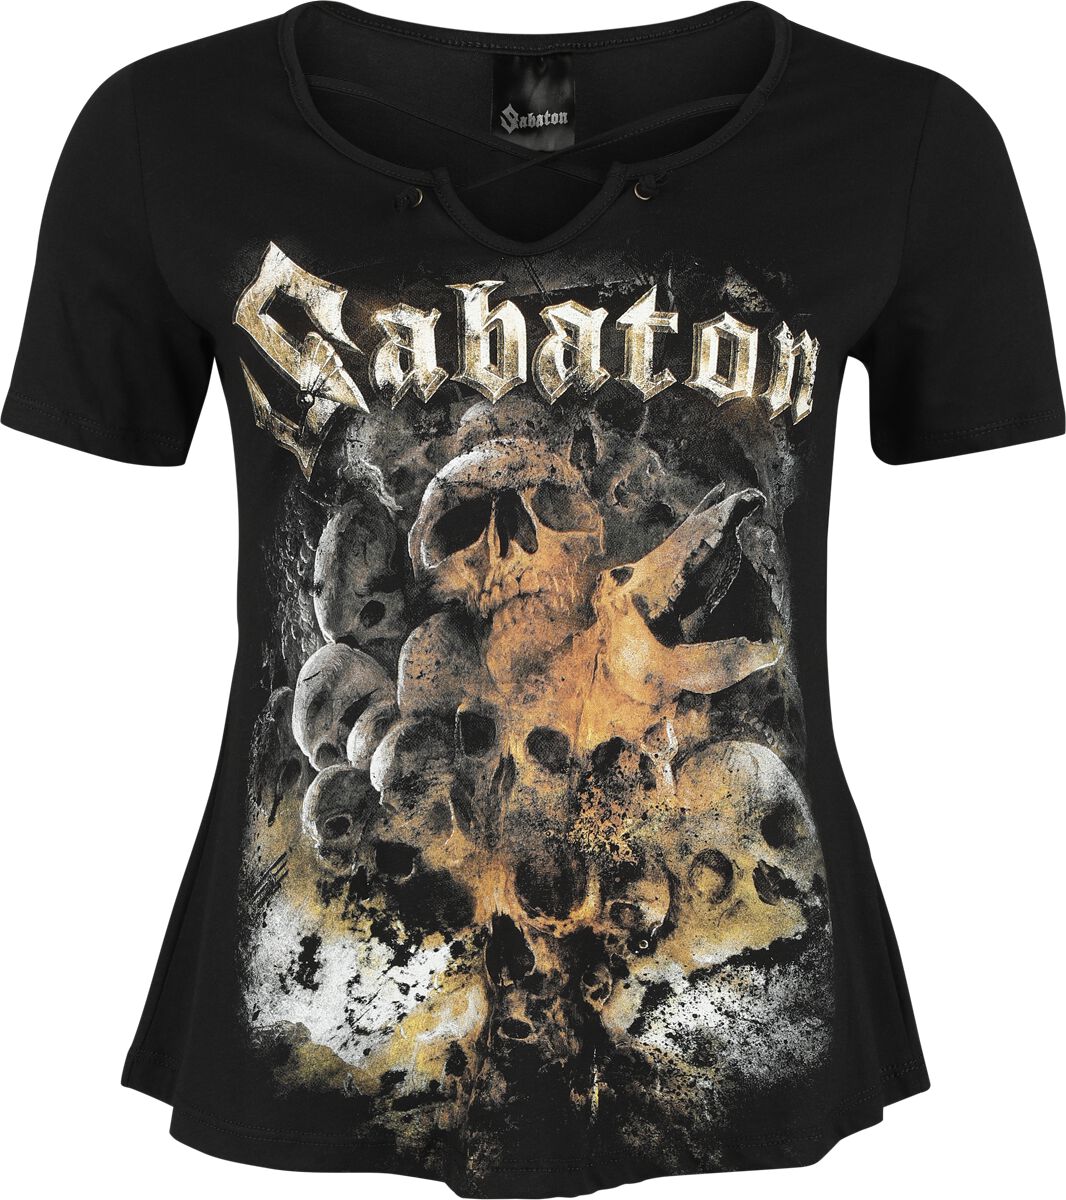 Sabaton - The Great War - T-Shirt - schwarz - EMP Exklusiv!